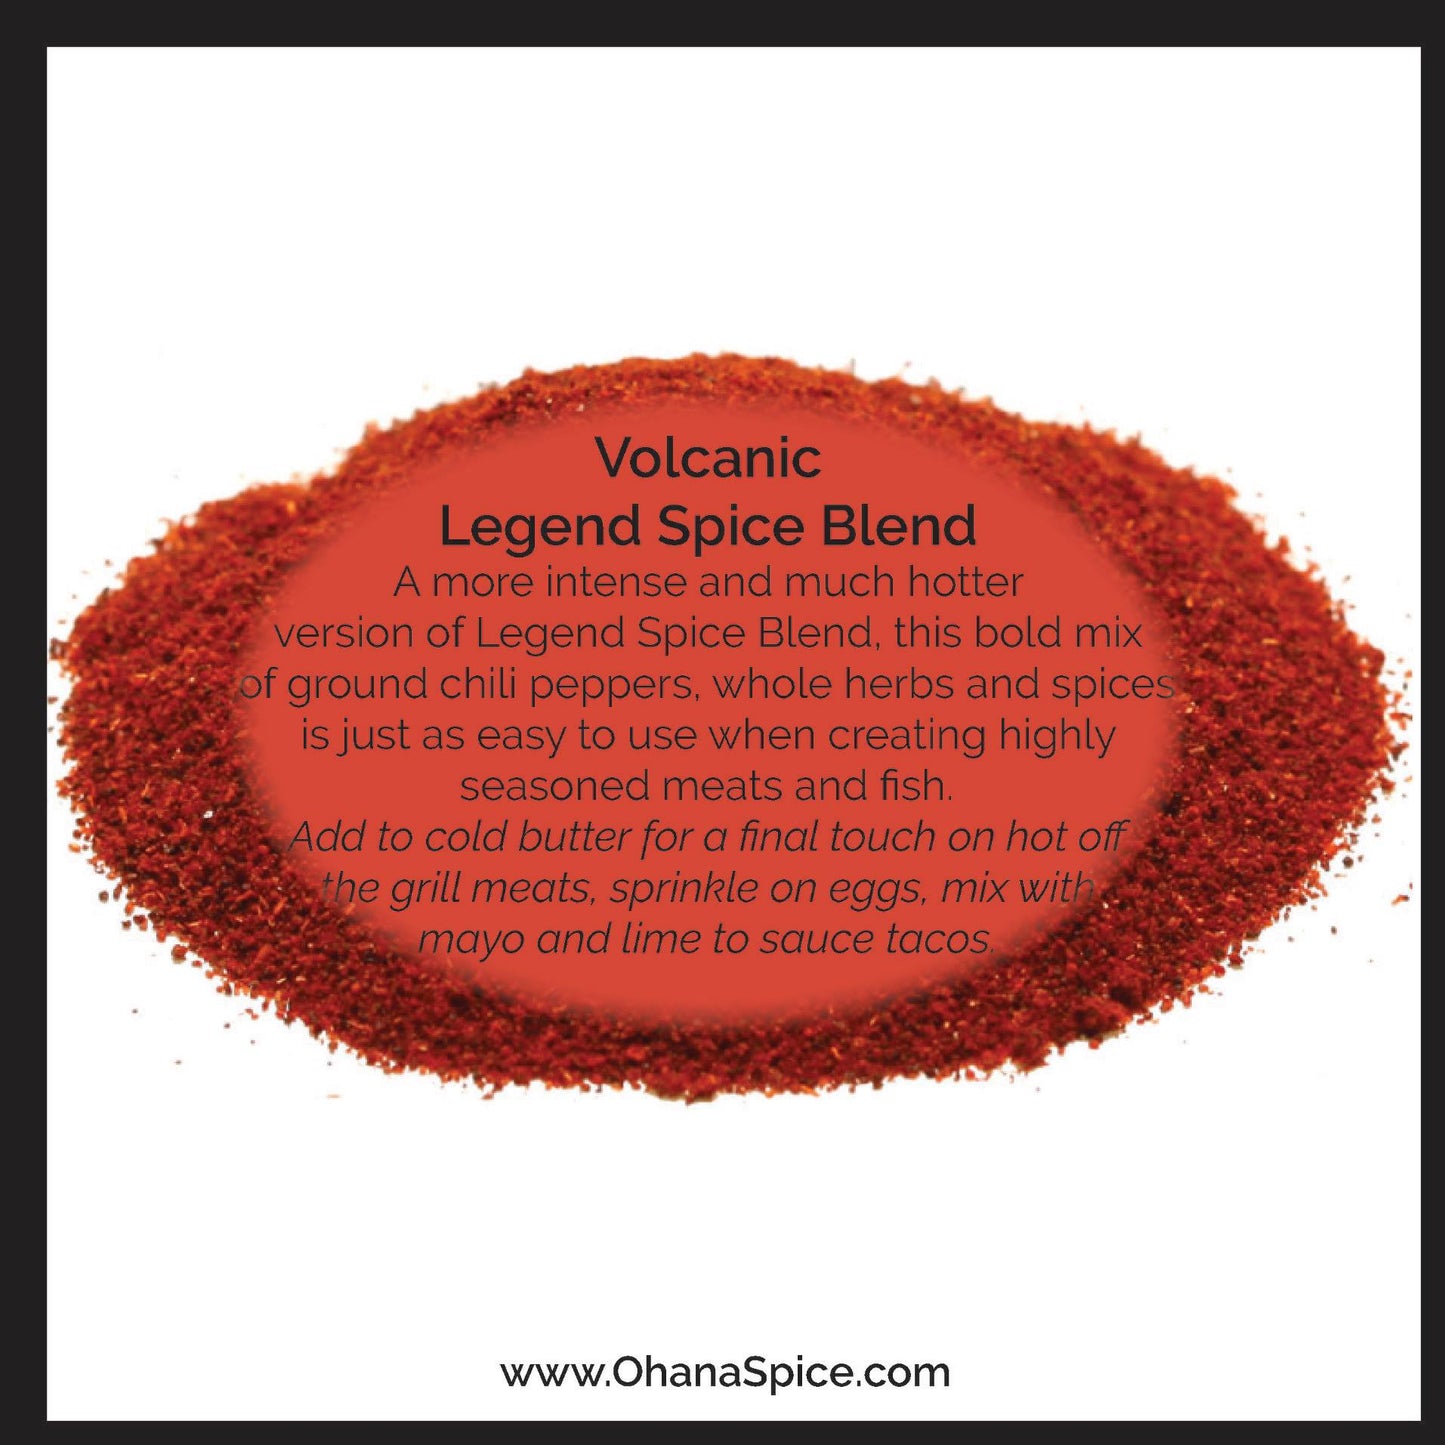 Volcanic Legend Spice Blend